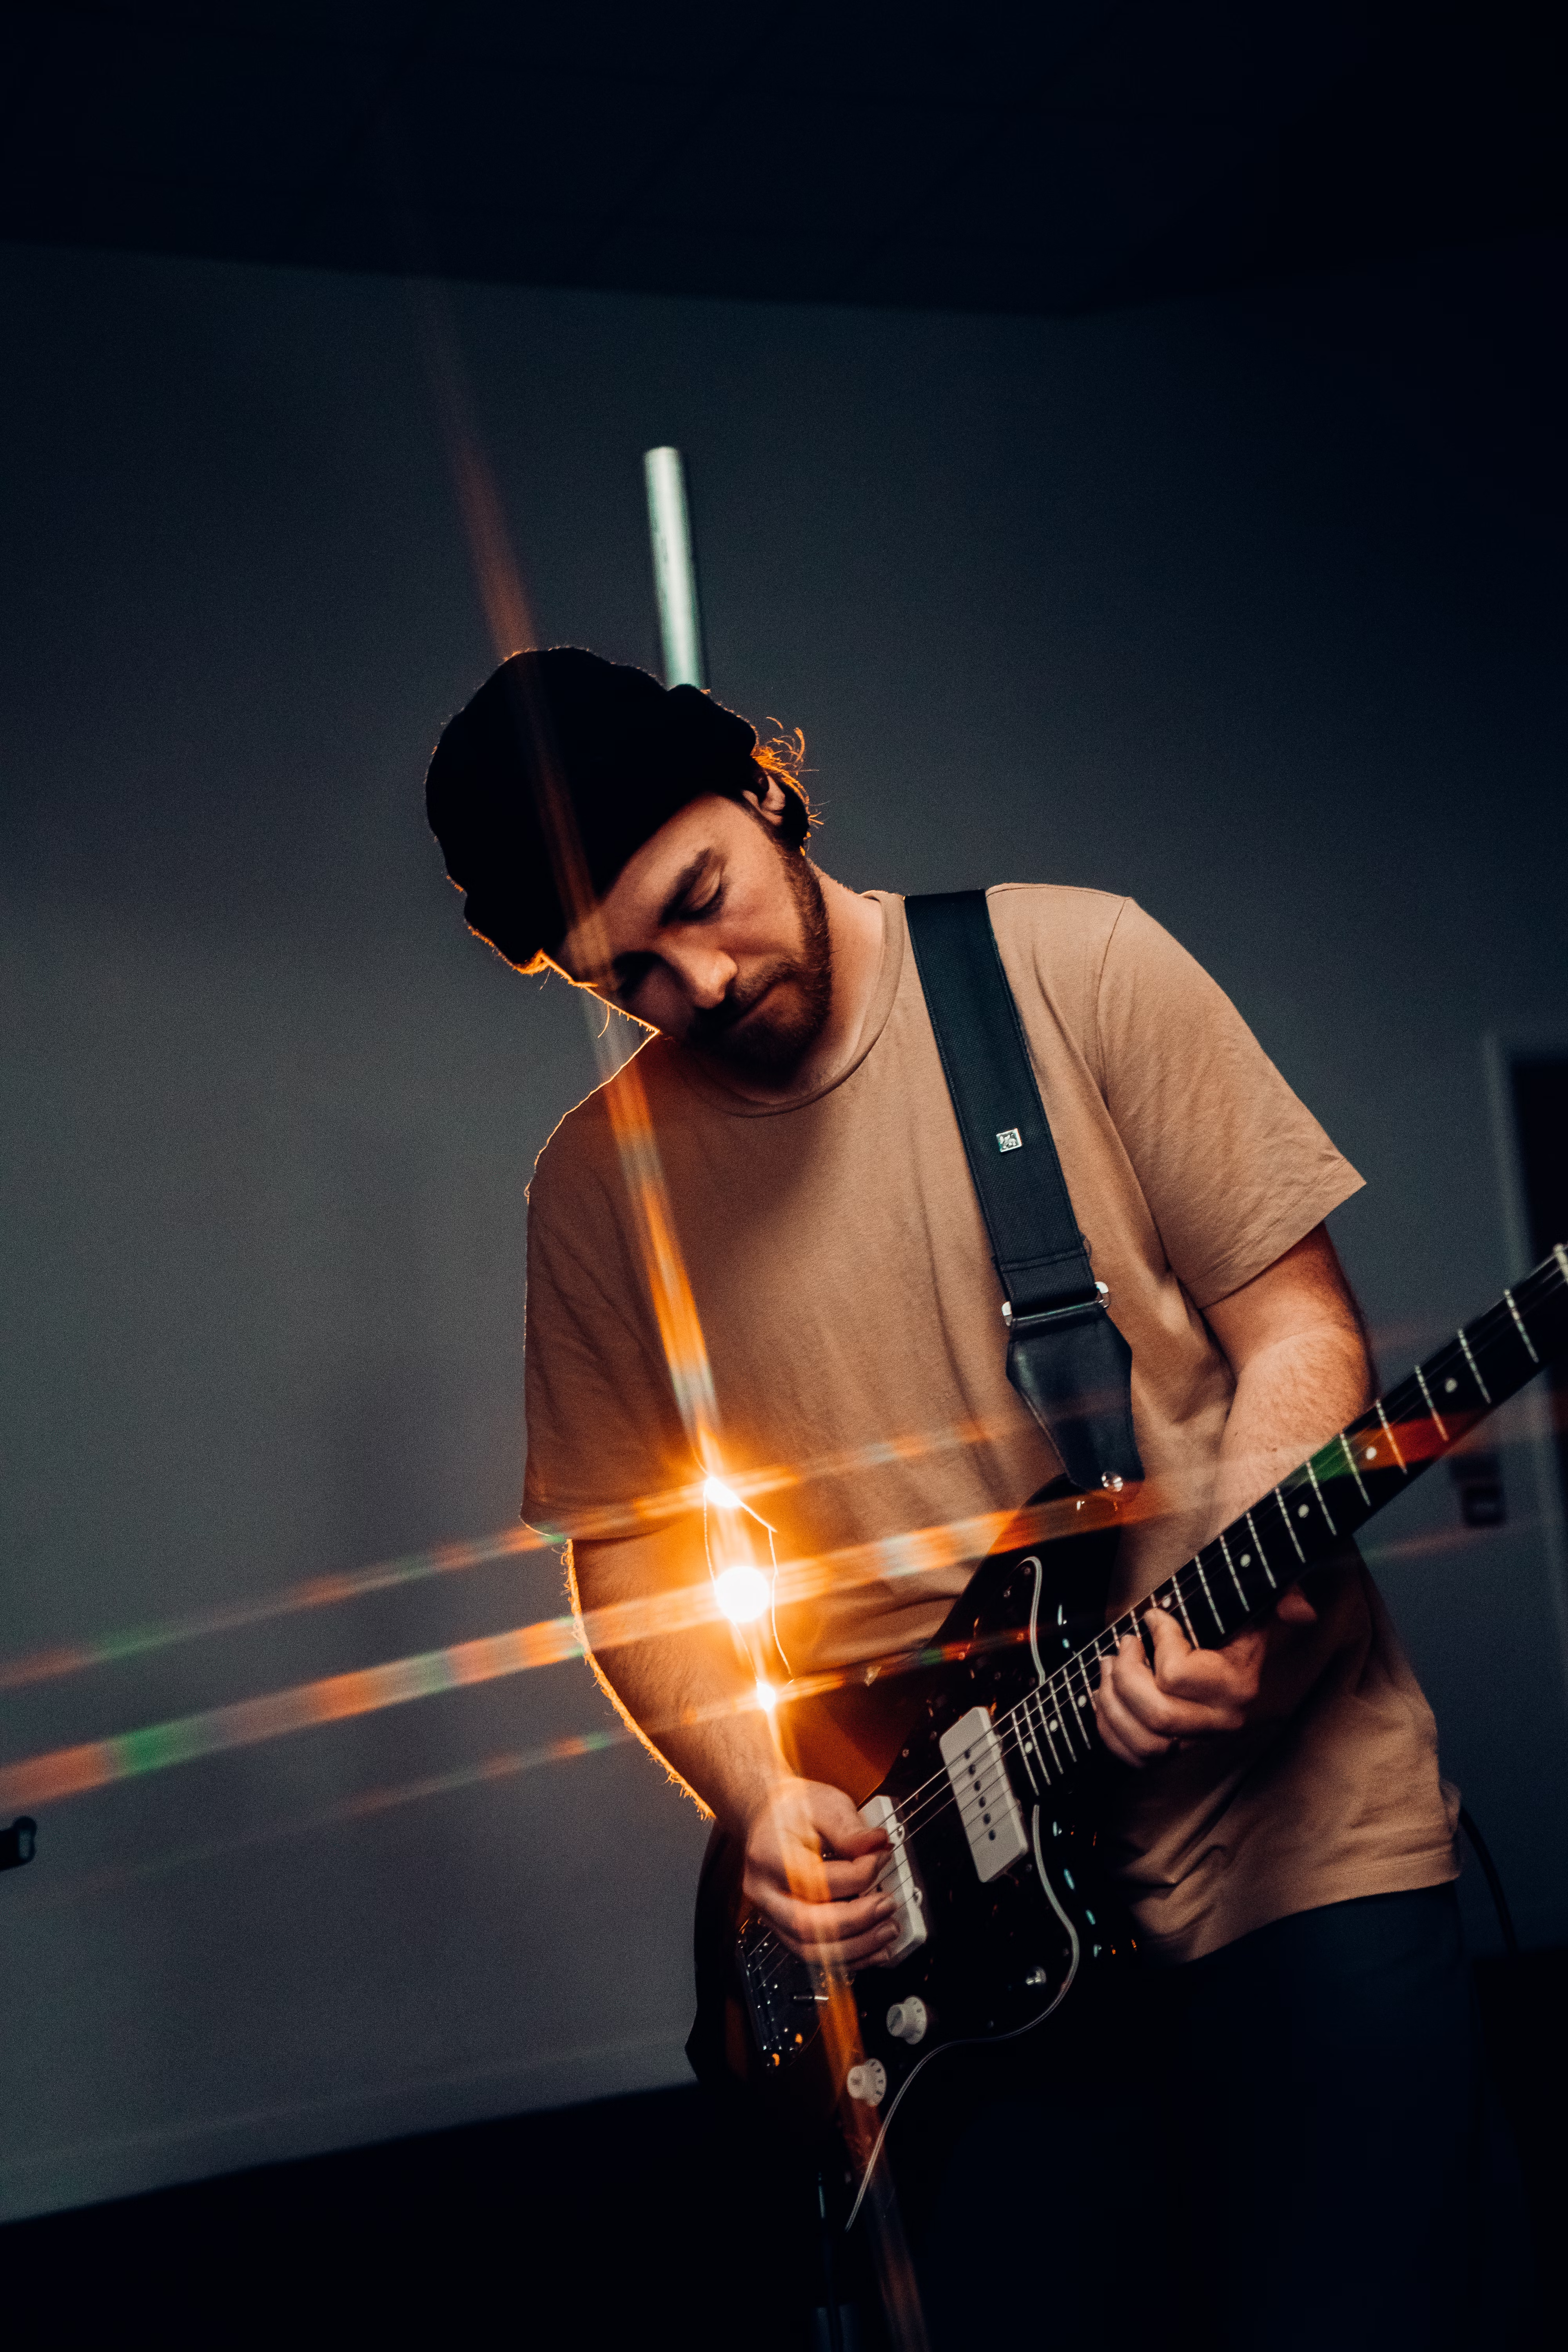 Man playing guitar, recording music for the Soundstripe enterprise plan